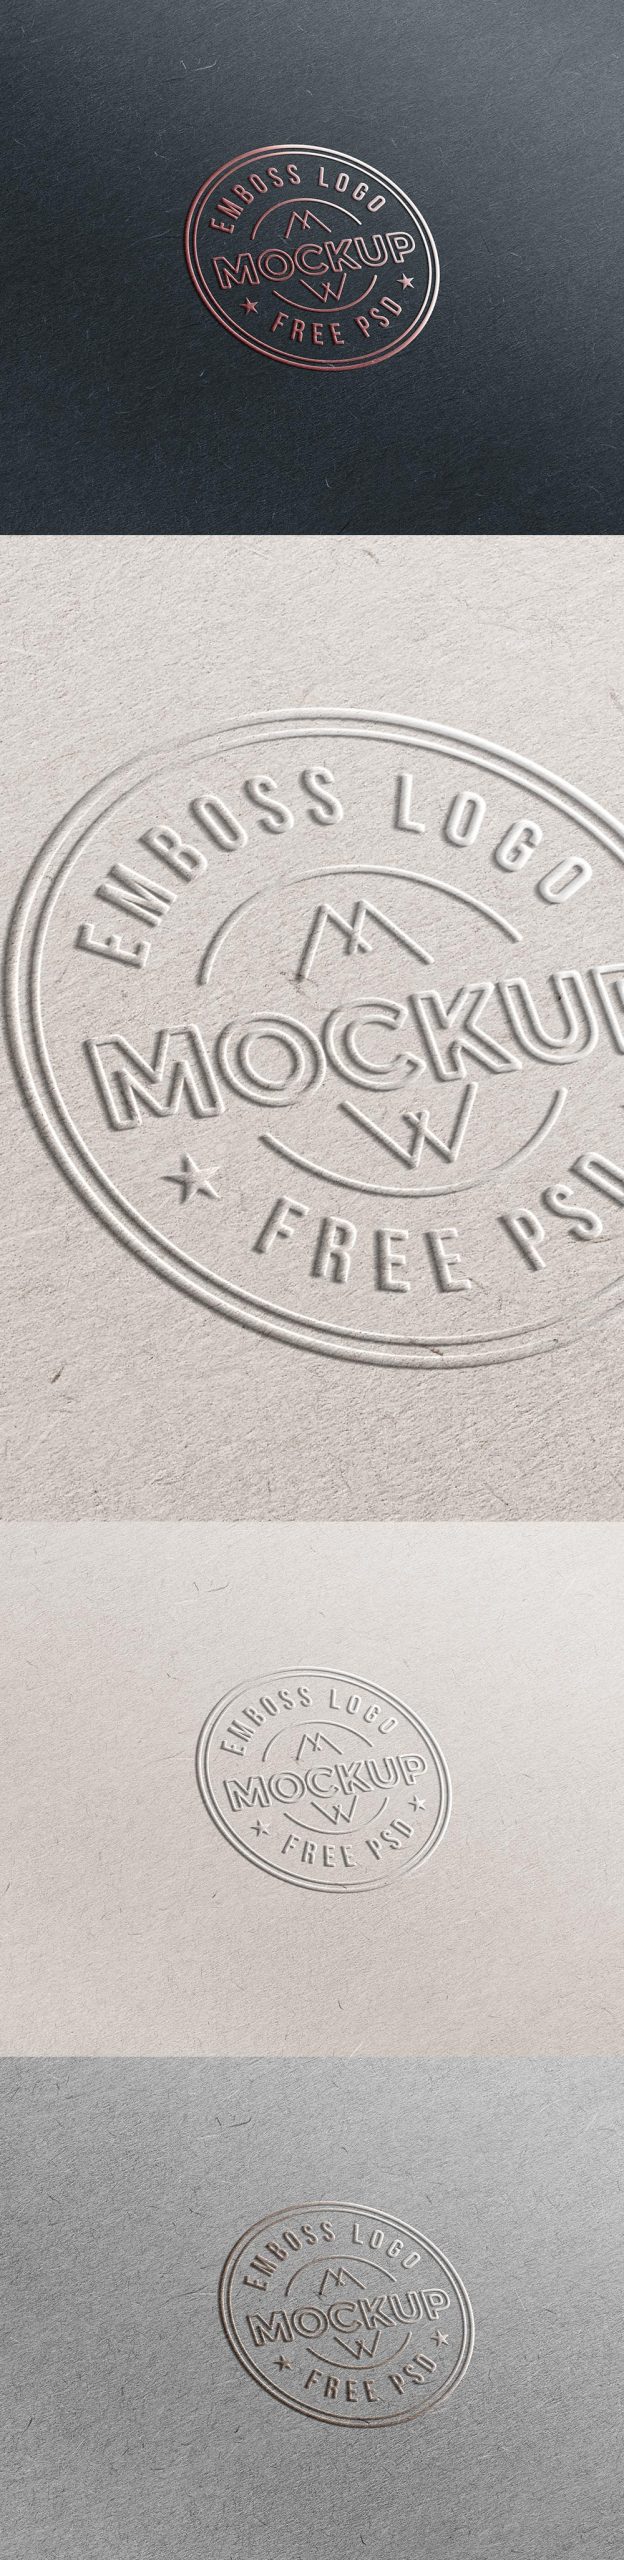 Top-Notch Emboss Paper Logo Mockup PSD Free Download